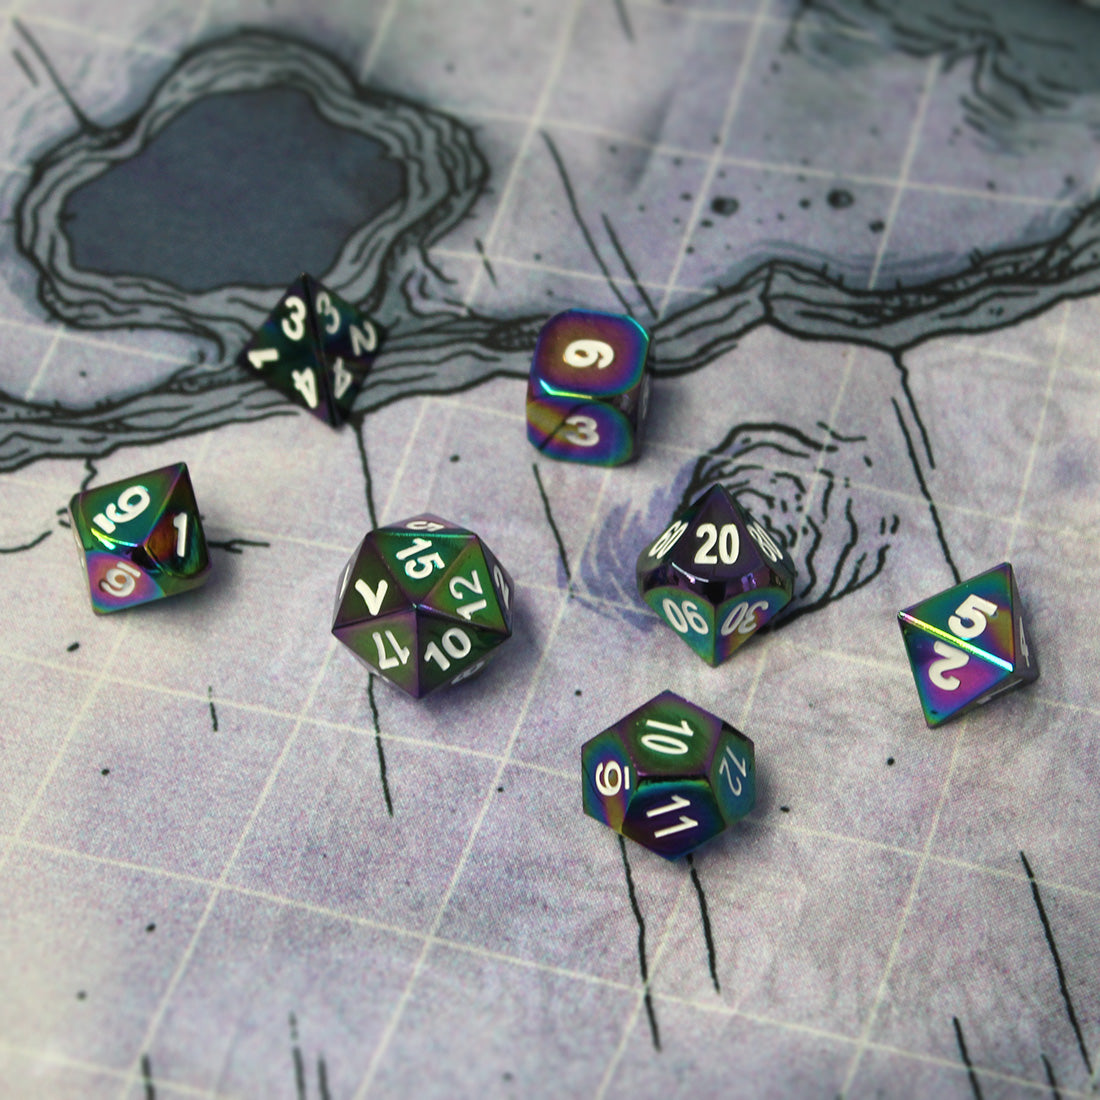 Oil style metal dice on 1" battlemap.